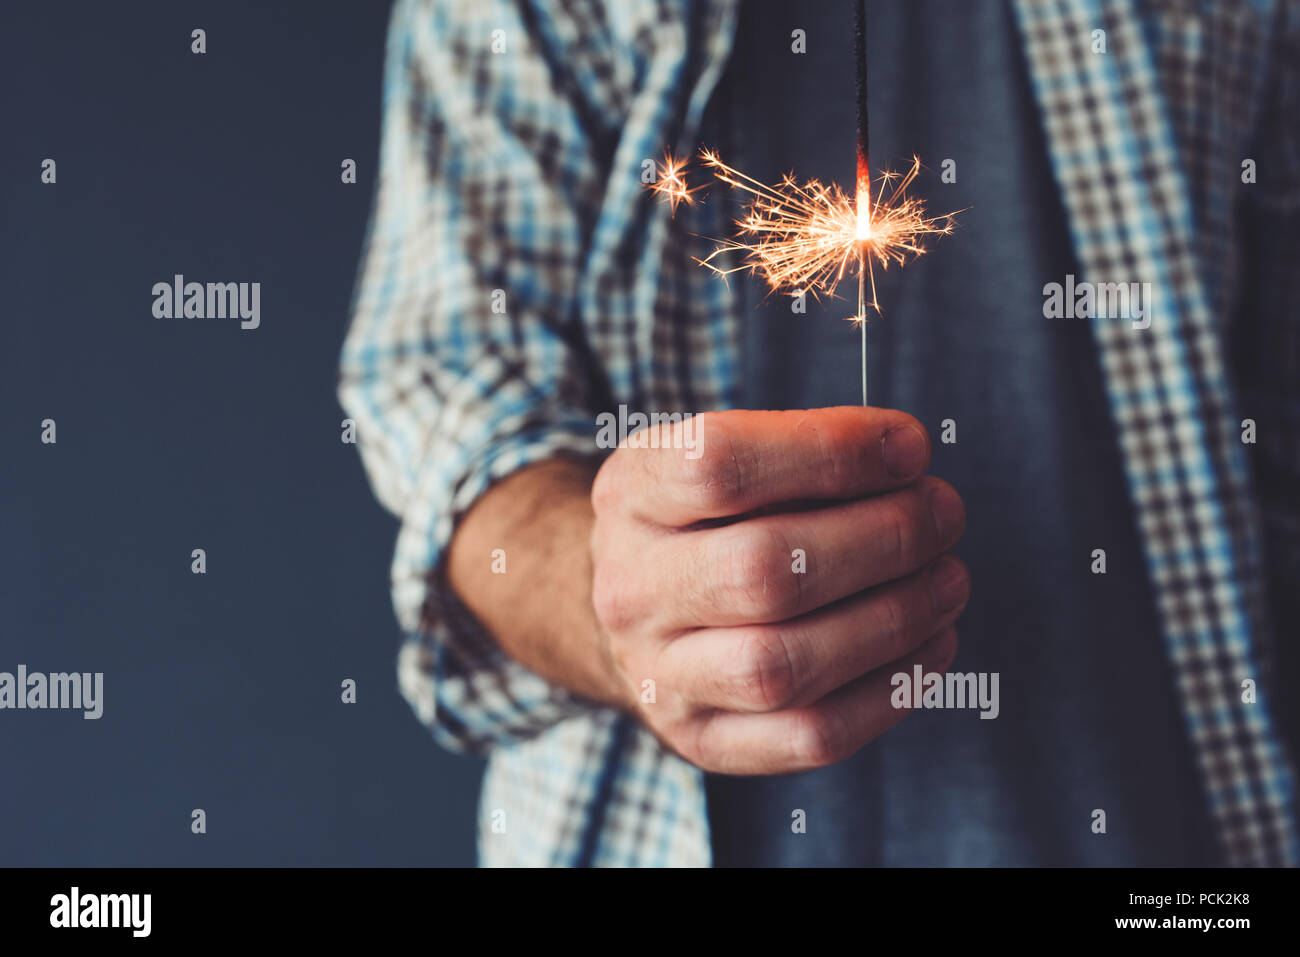 Man holding stick sparkler, close up of hand Stock Photo